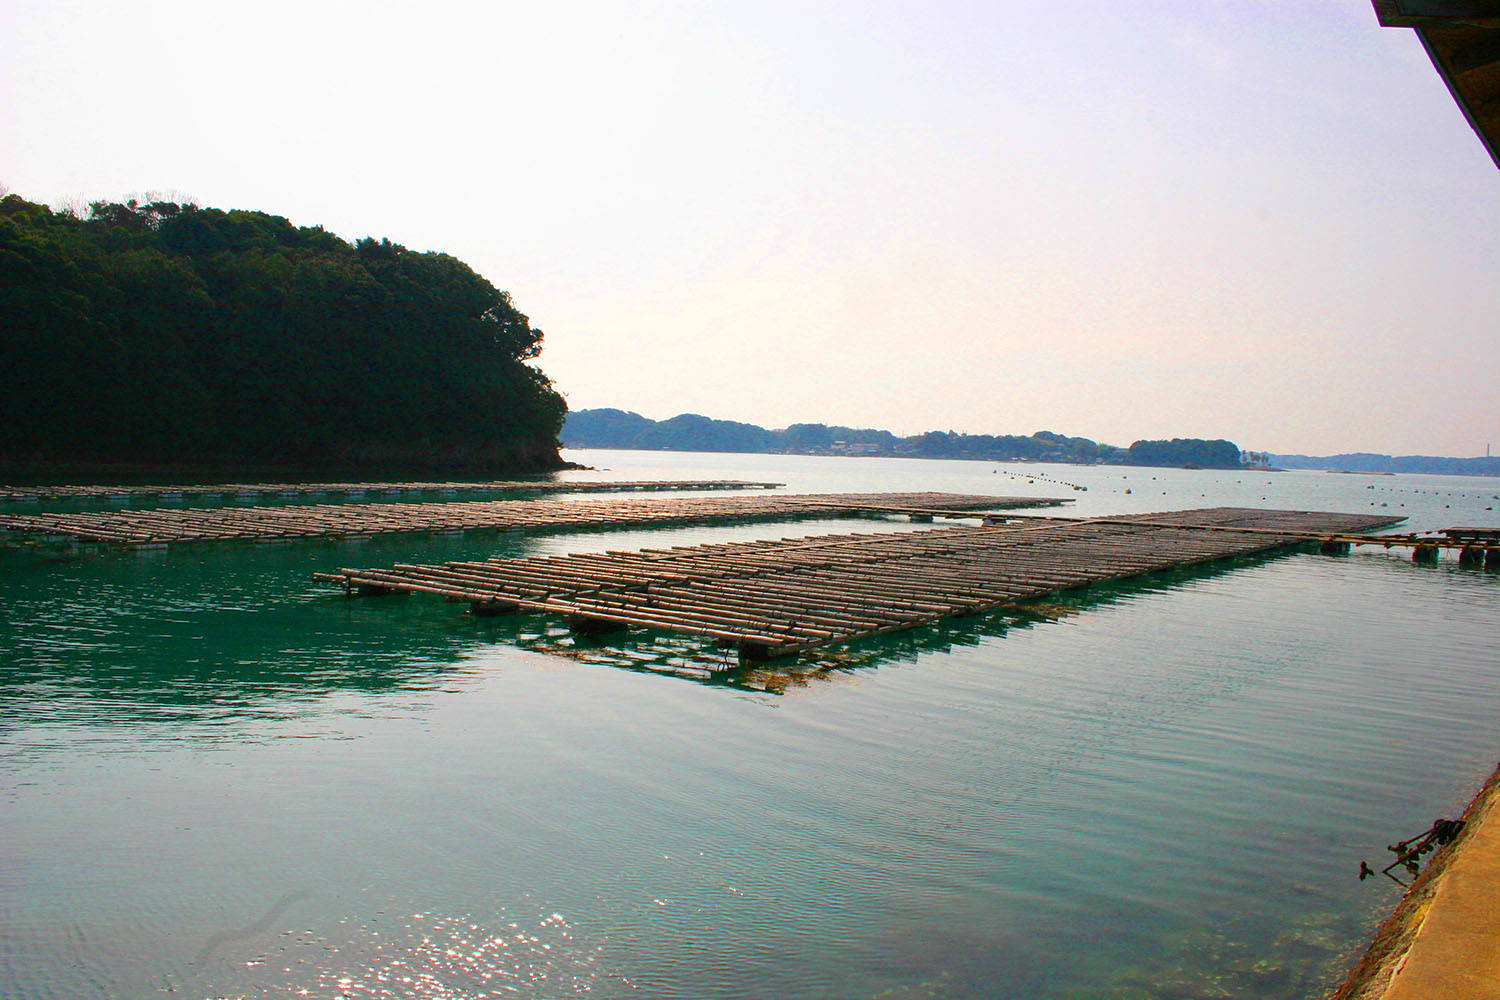 Akoya Pearl Farm in Japan